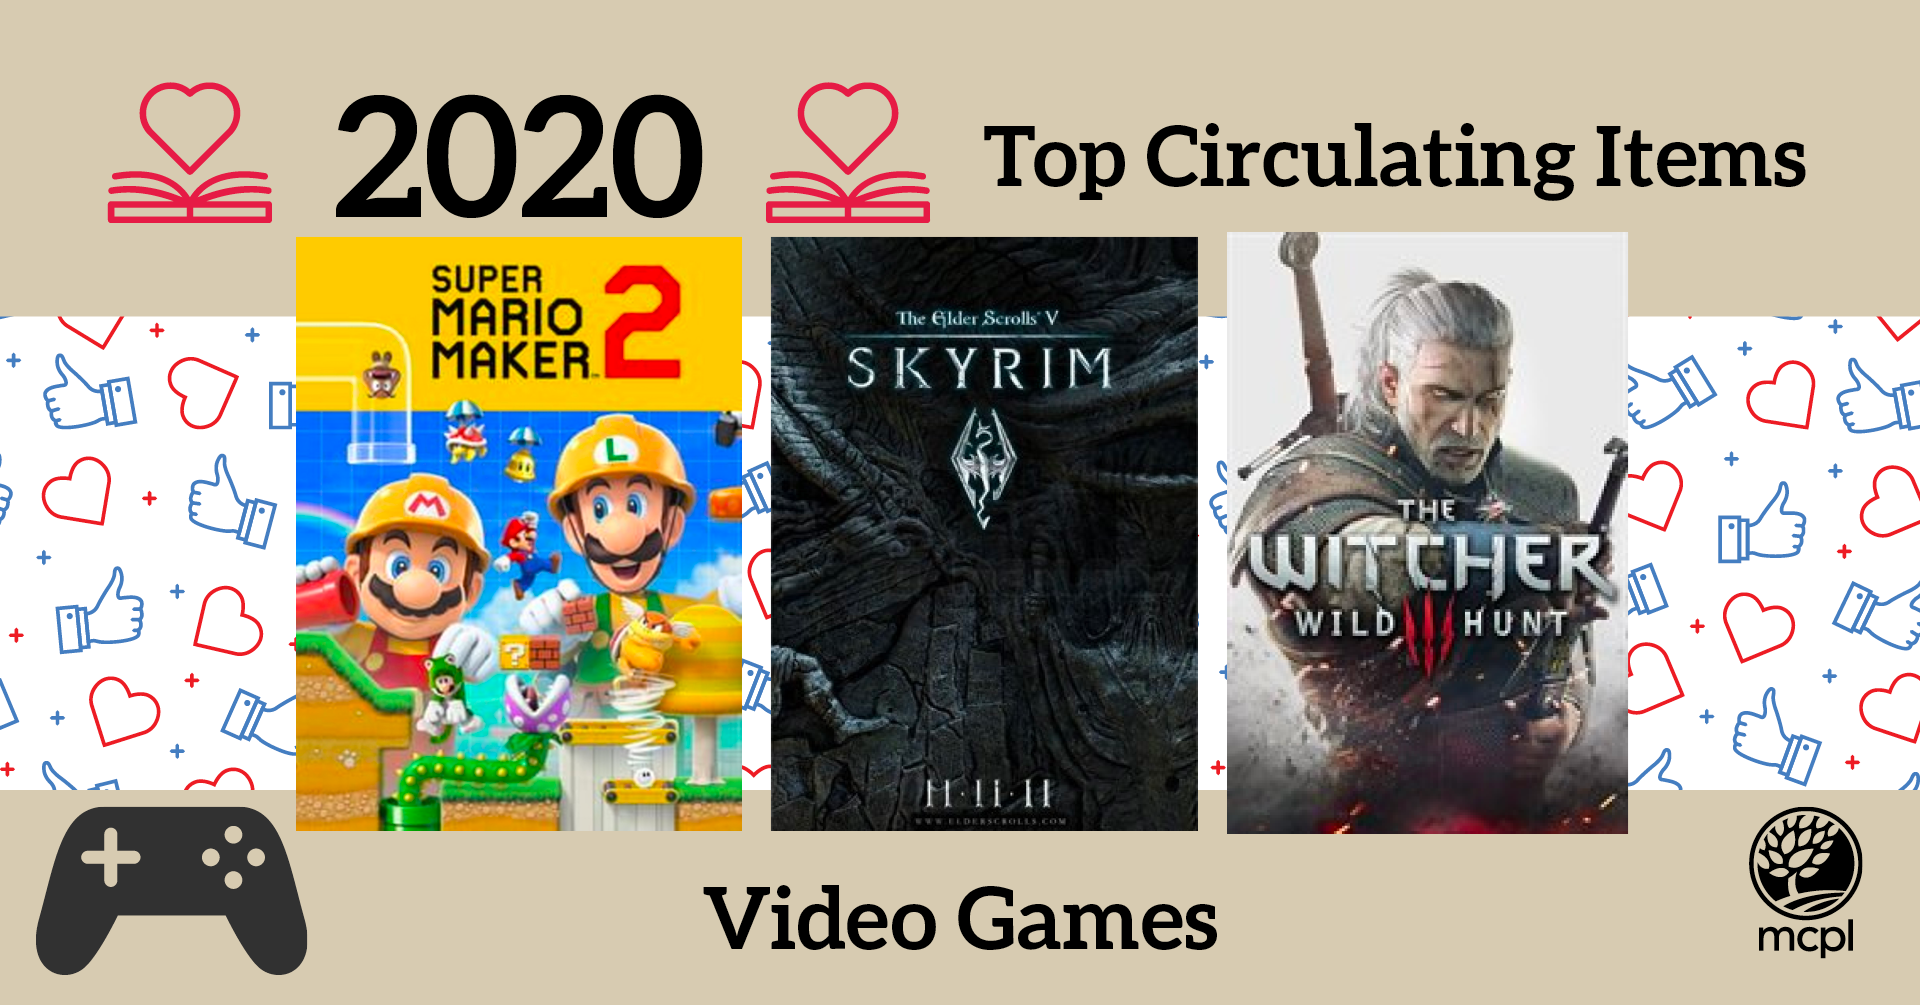 2020 Top Circulating Items: Video Games